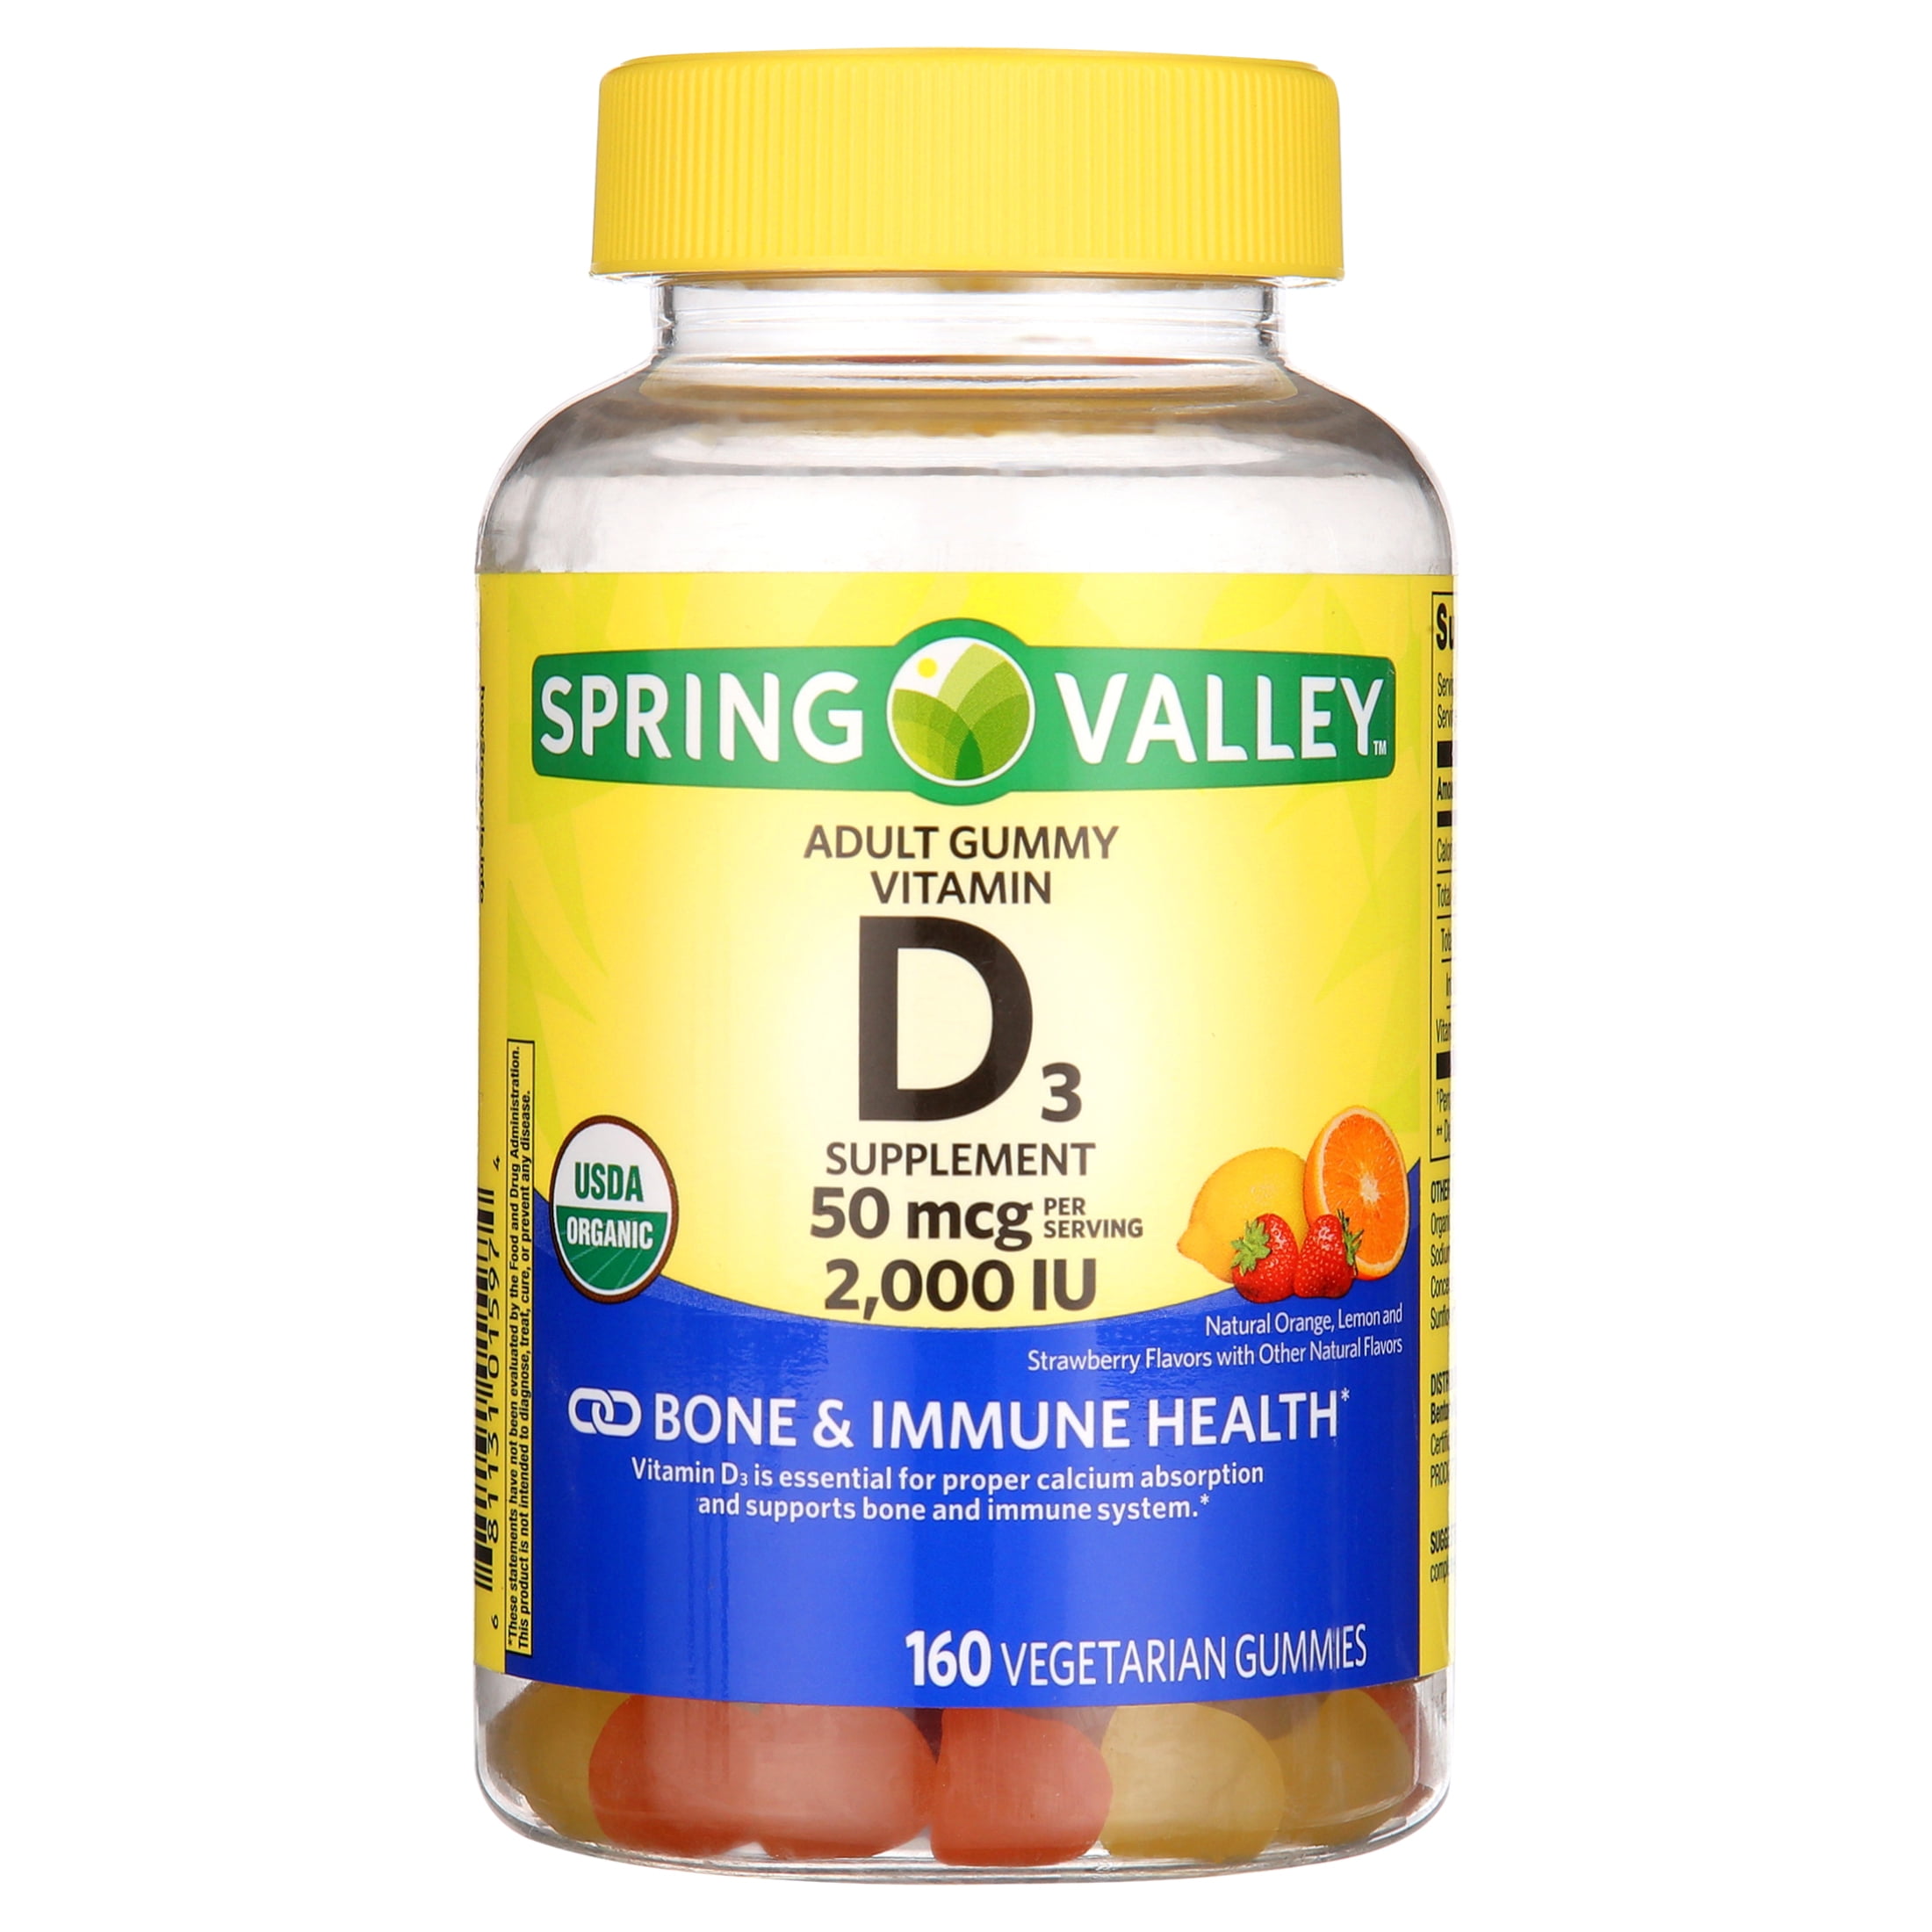 Spring Valley USDA Organic Vitamin D3 Vegetarian Gummies, Assorted Fruits,  50 mcg, 160 Count